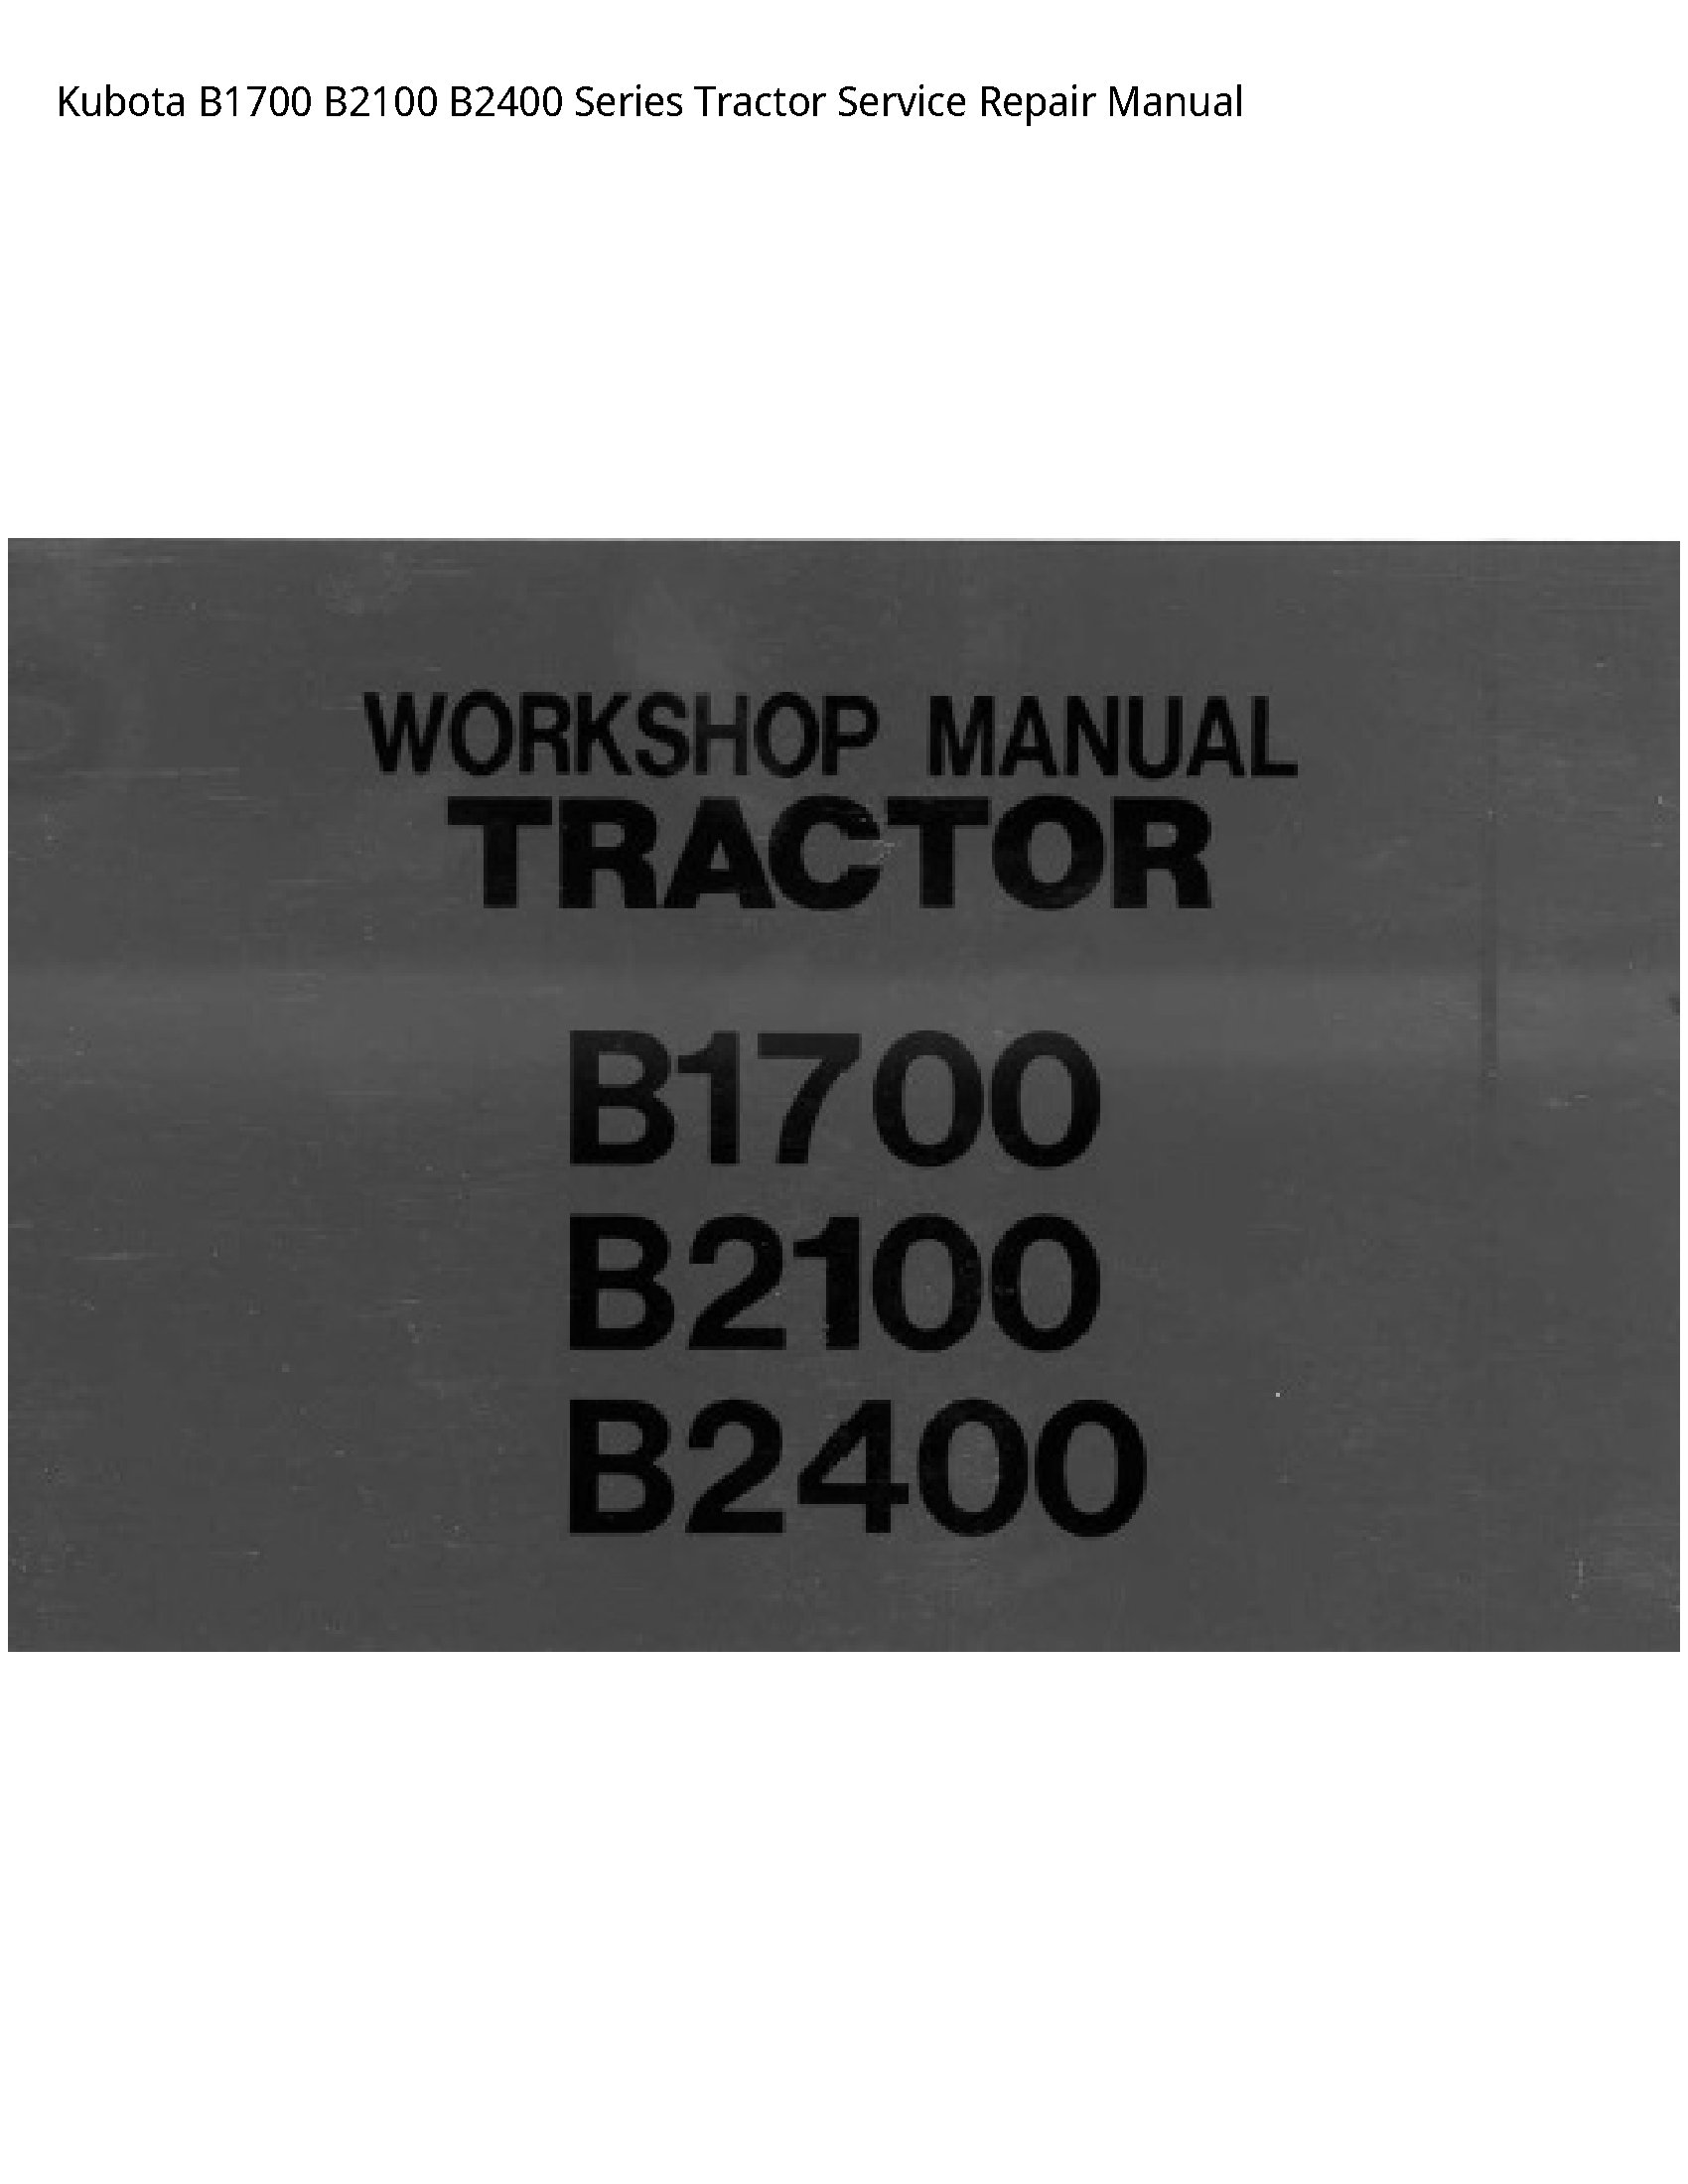 Kubota B1700 Series Tractor manual